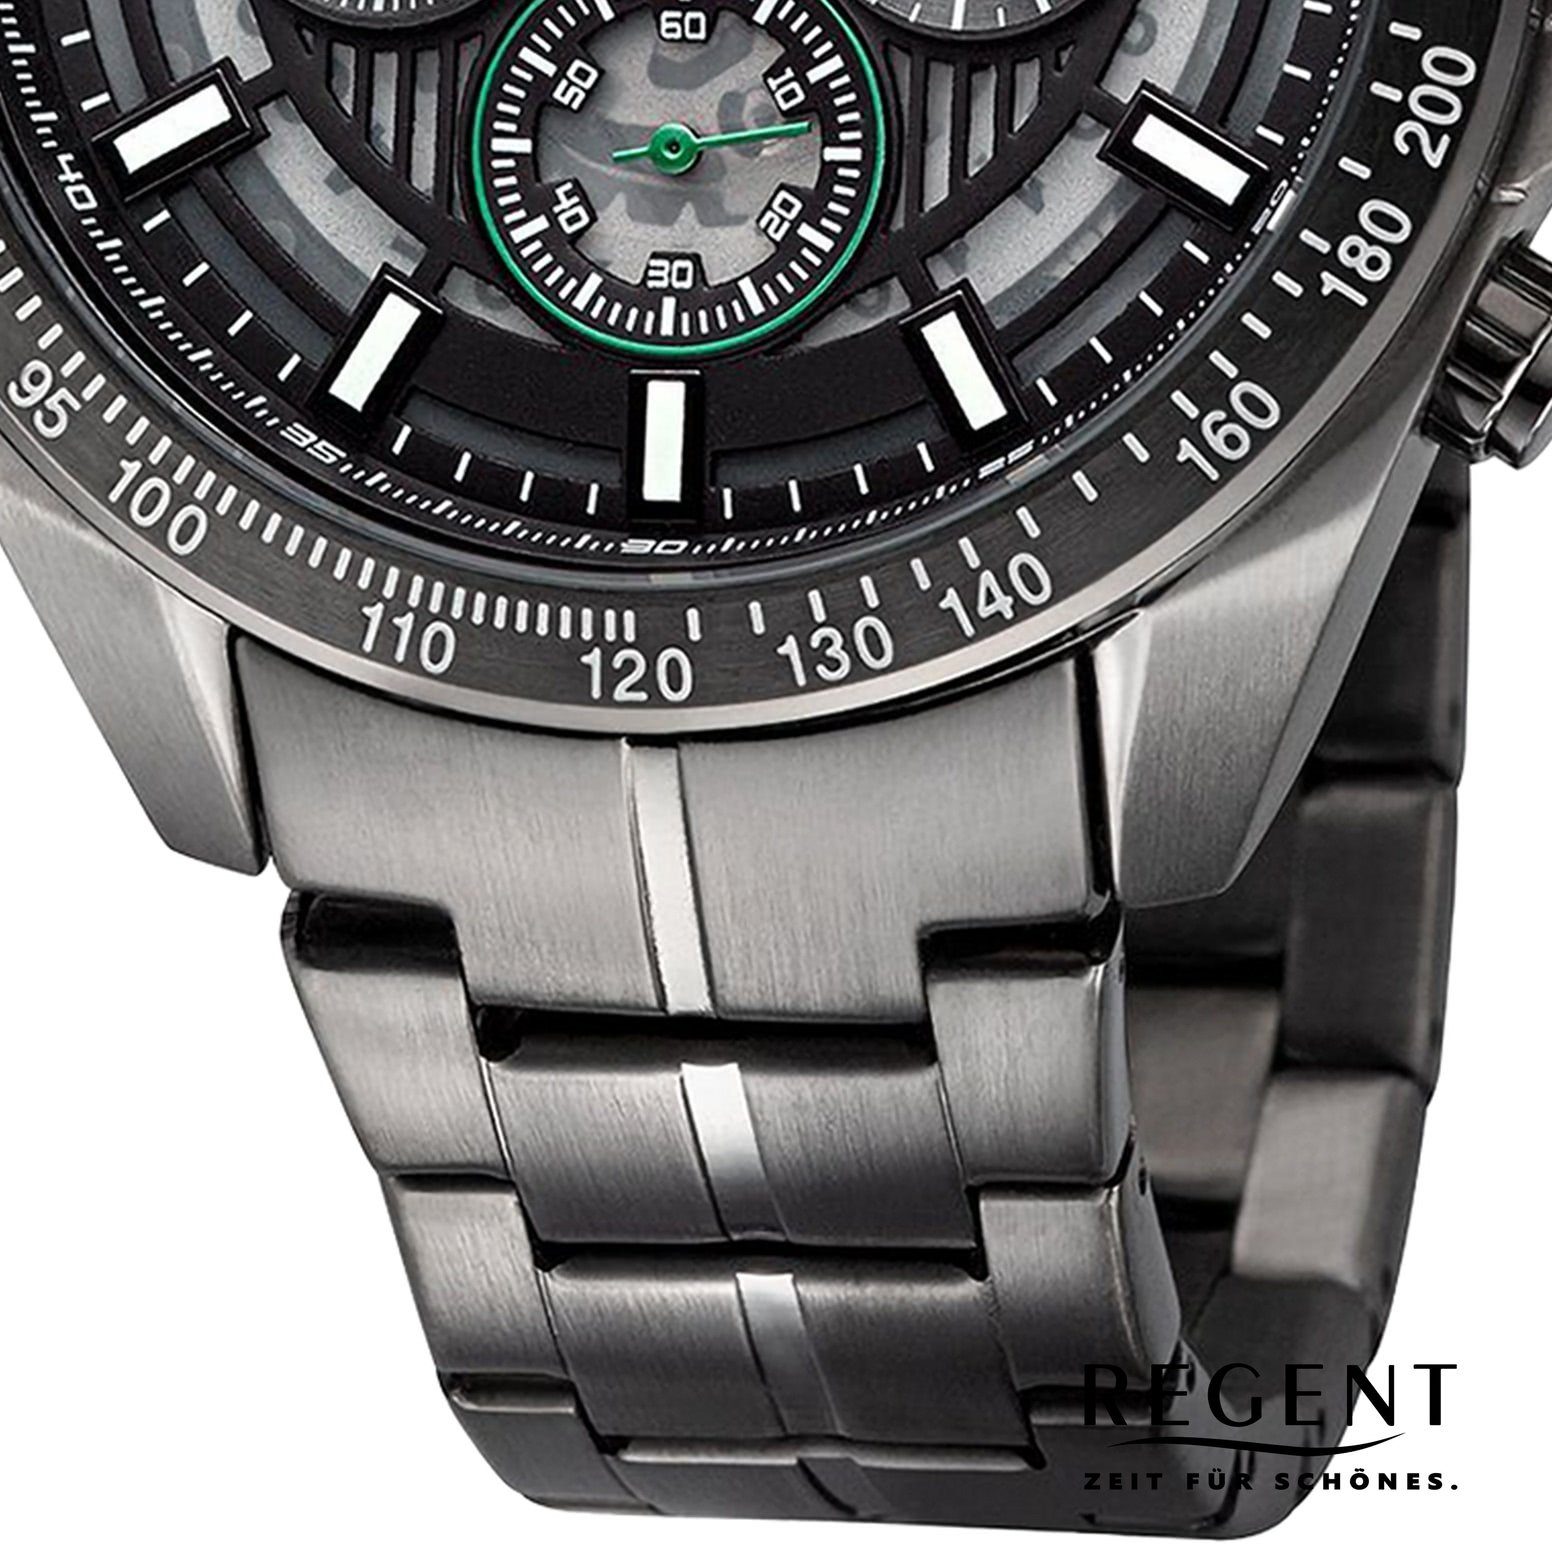 Quarzuhr Armbanduhr Herren rund, Regent Armbanduhr Analog, 46mm), grün (ca. extra Regent groß Metallarmband Herren